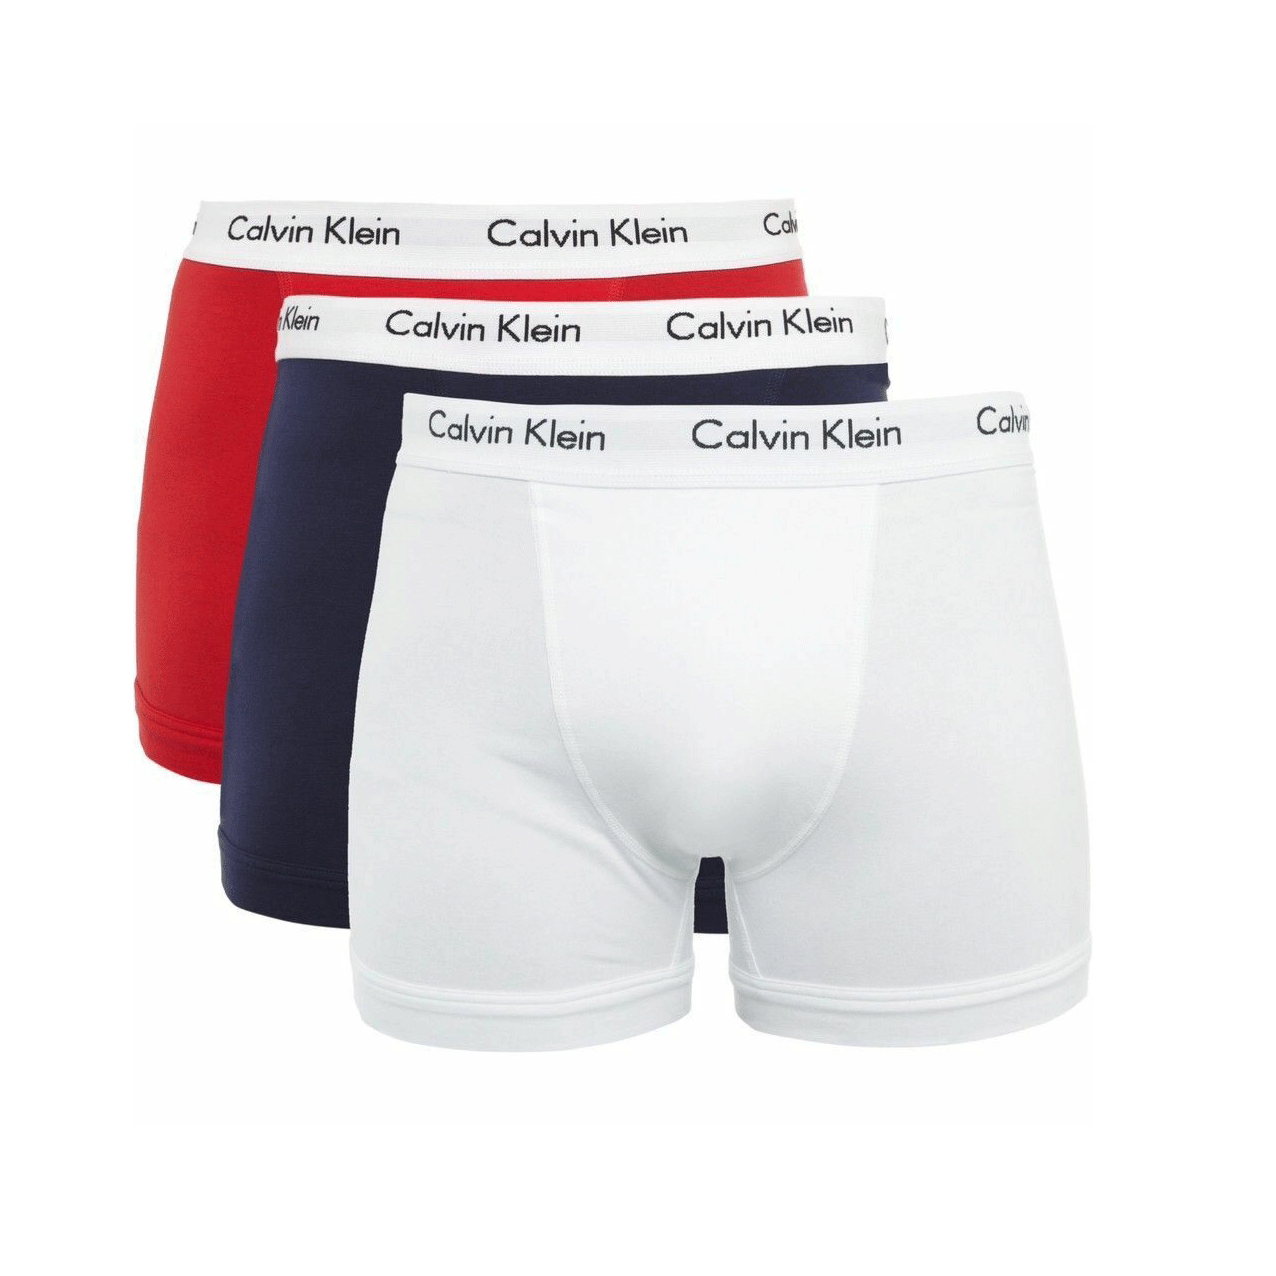 Men's Calvin Klein Cotton 3 Pack Underwear Boxers Low Rise Trunks Briefs U2662G-I03 freeshipping - Benson66